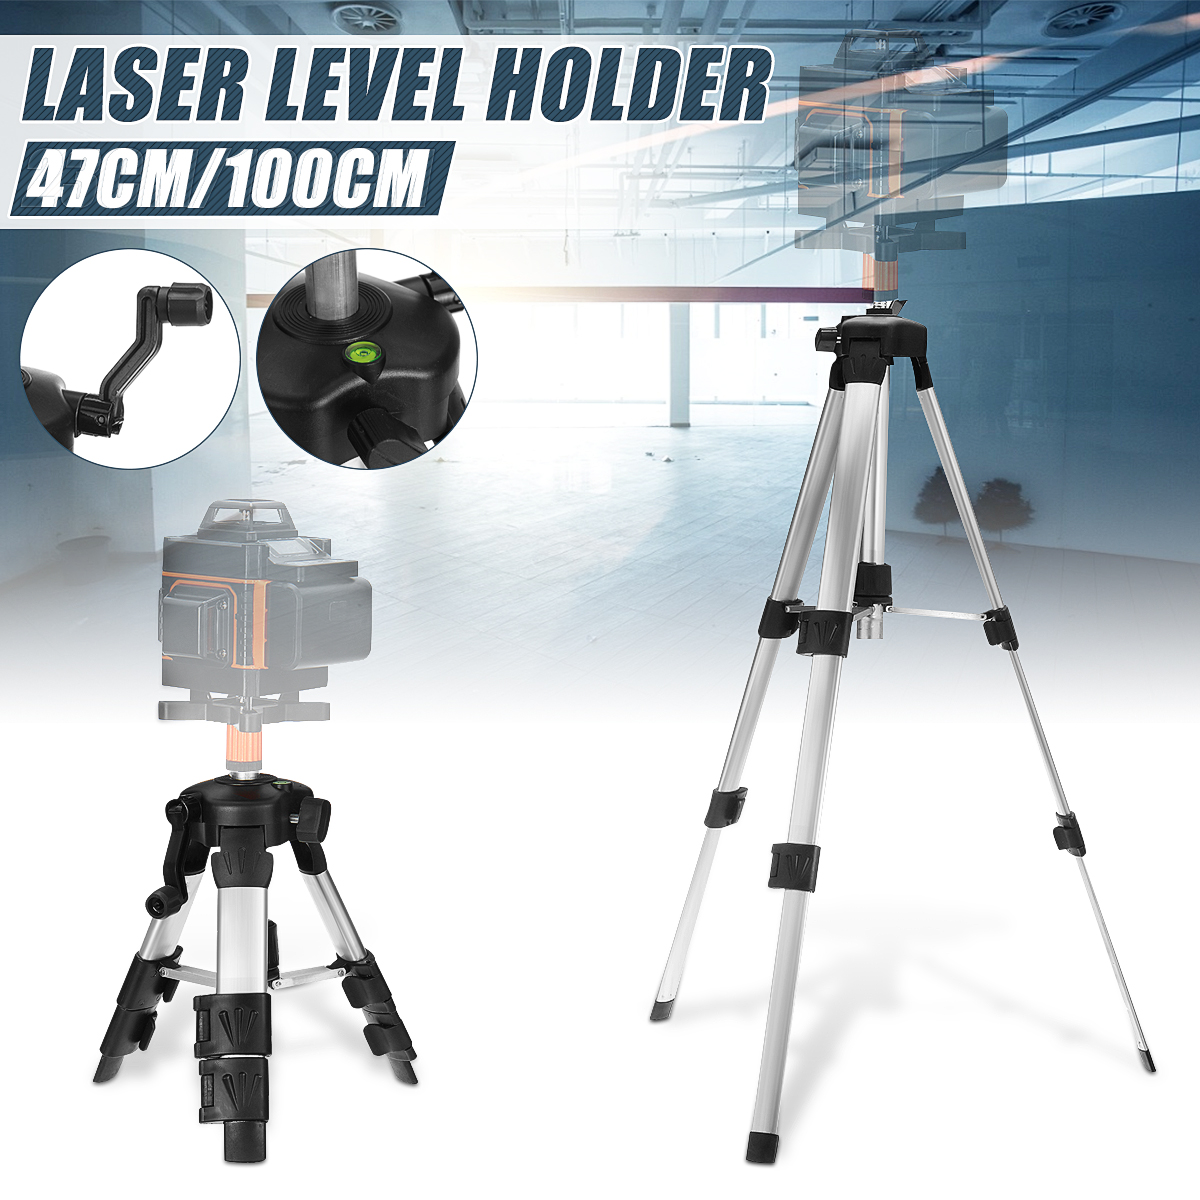 47100CM-Folding-Adjustable-Aluminium-Alloy-Tripod-Base-Holder-For-Laser-Level-Electric-Laser-Measure-1652755-2